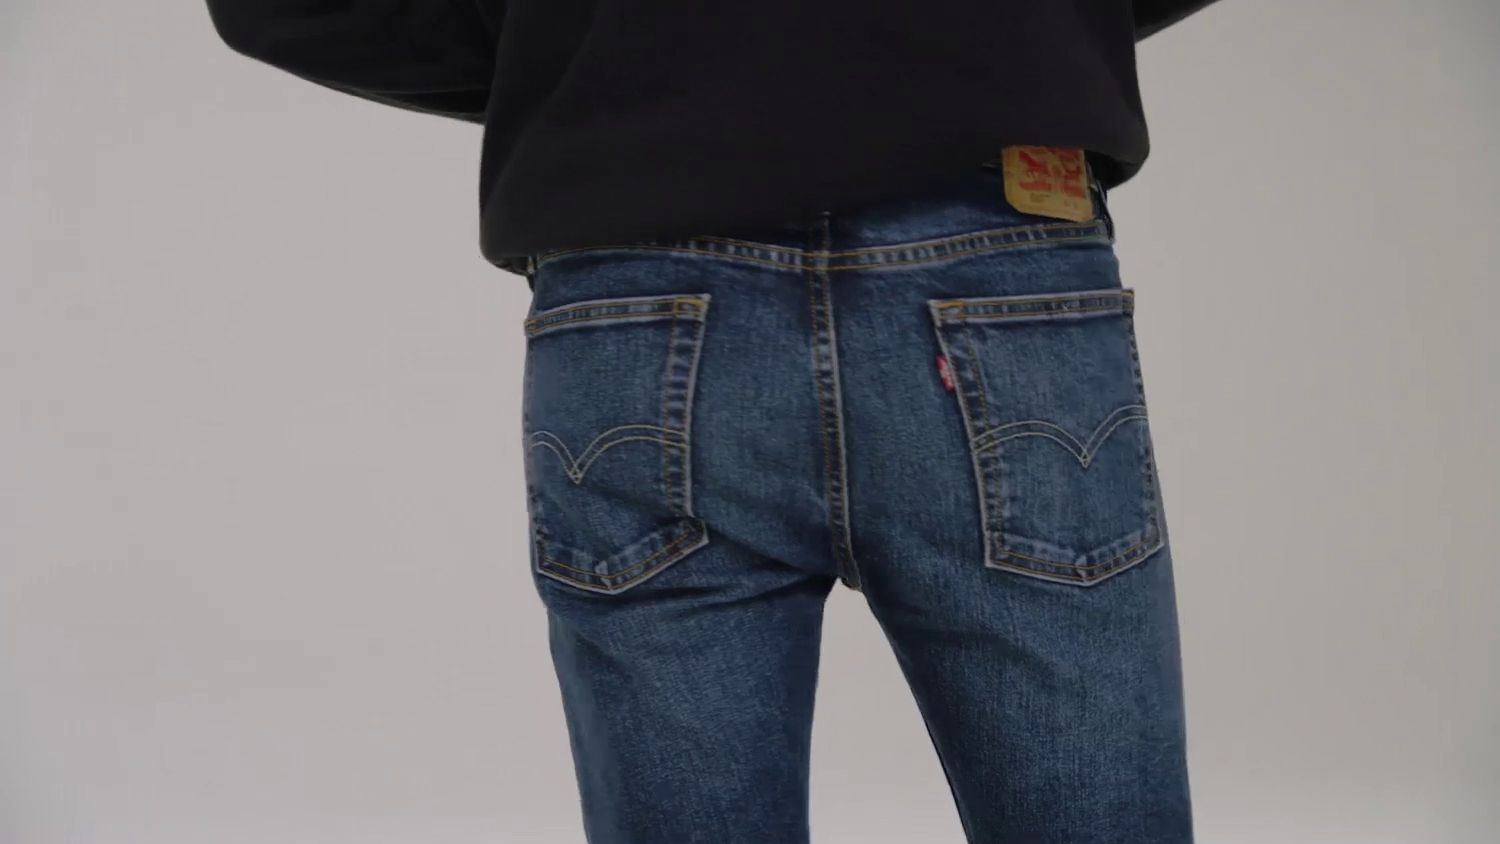 vergaan boycot expositie 510™ Skinny Fit Men's Jeans - Black | Levi's® US